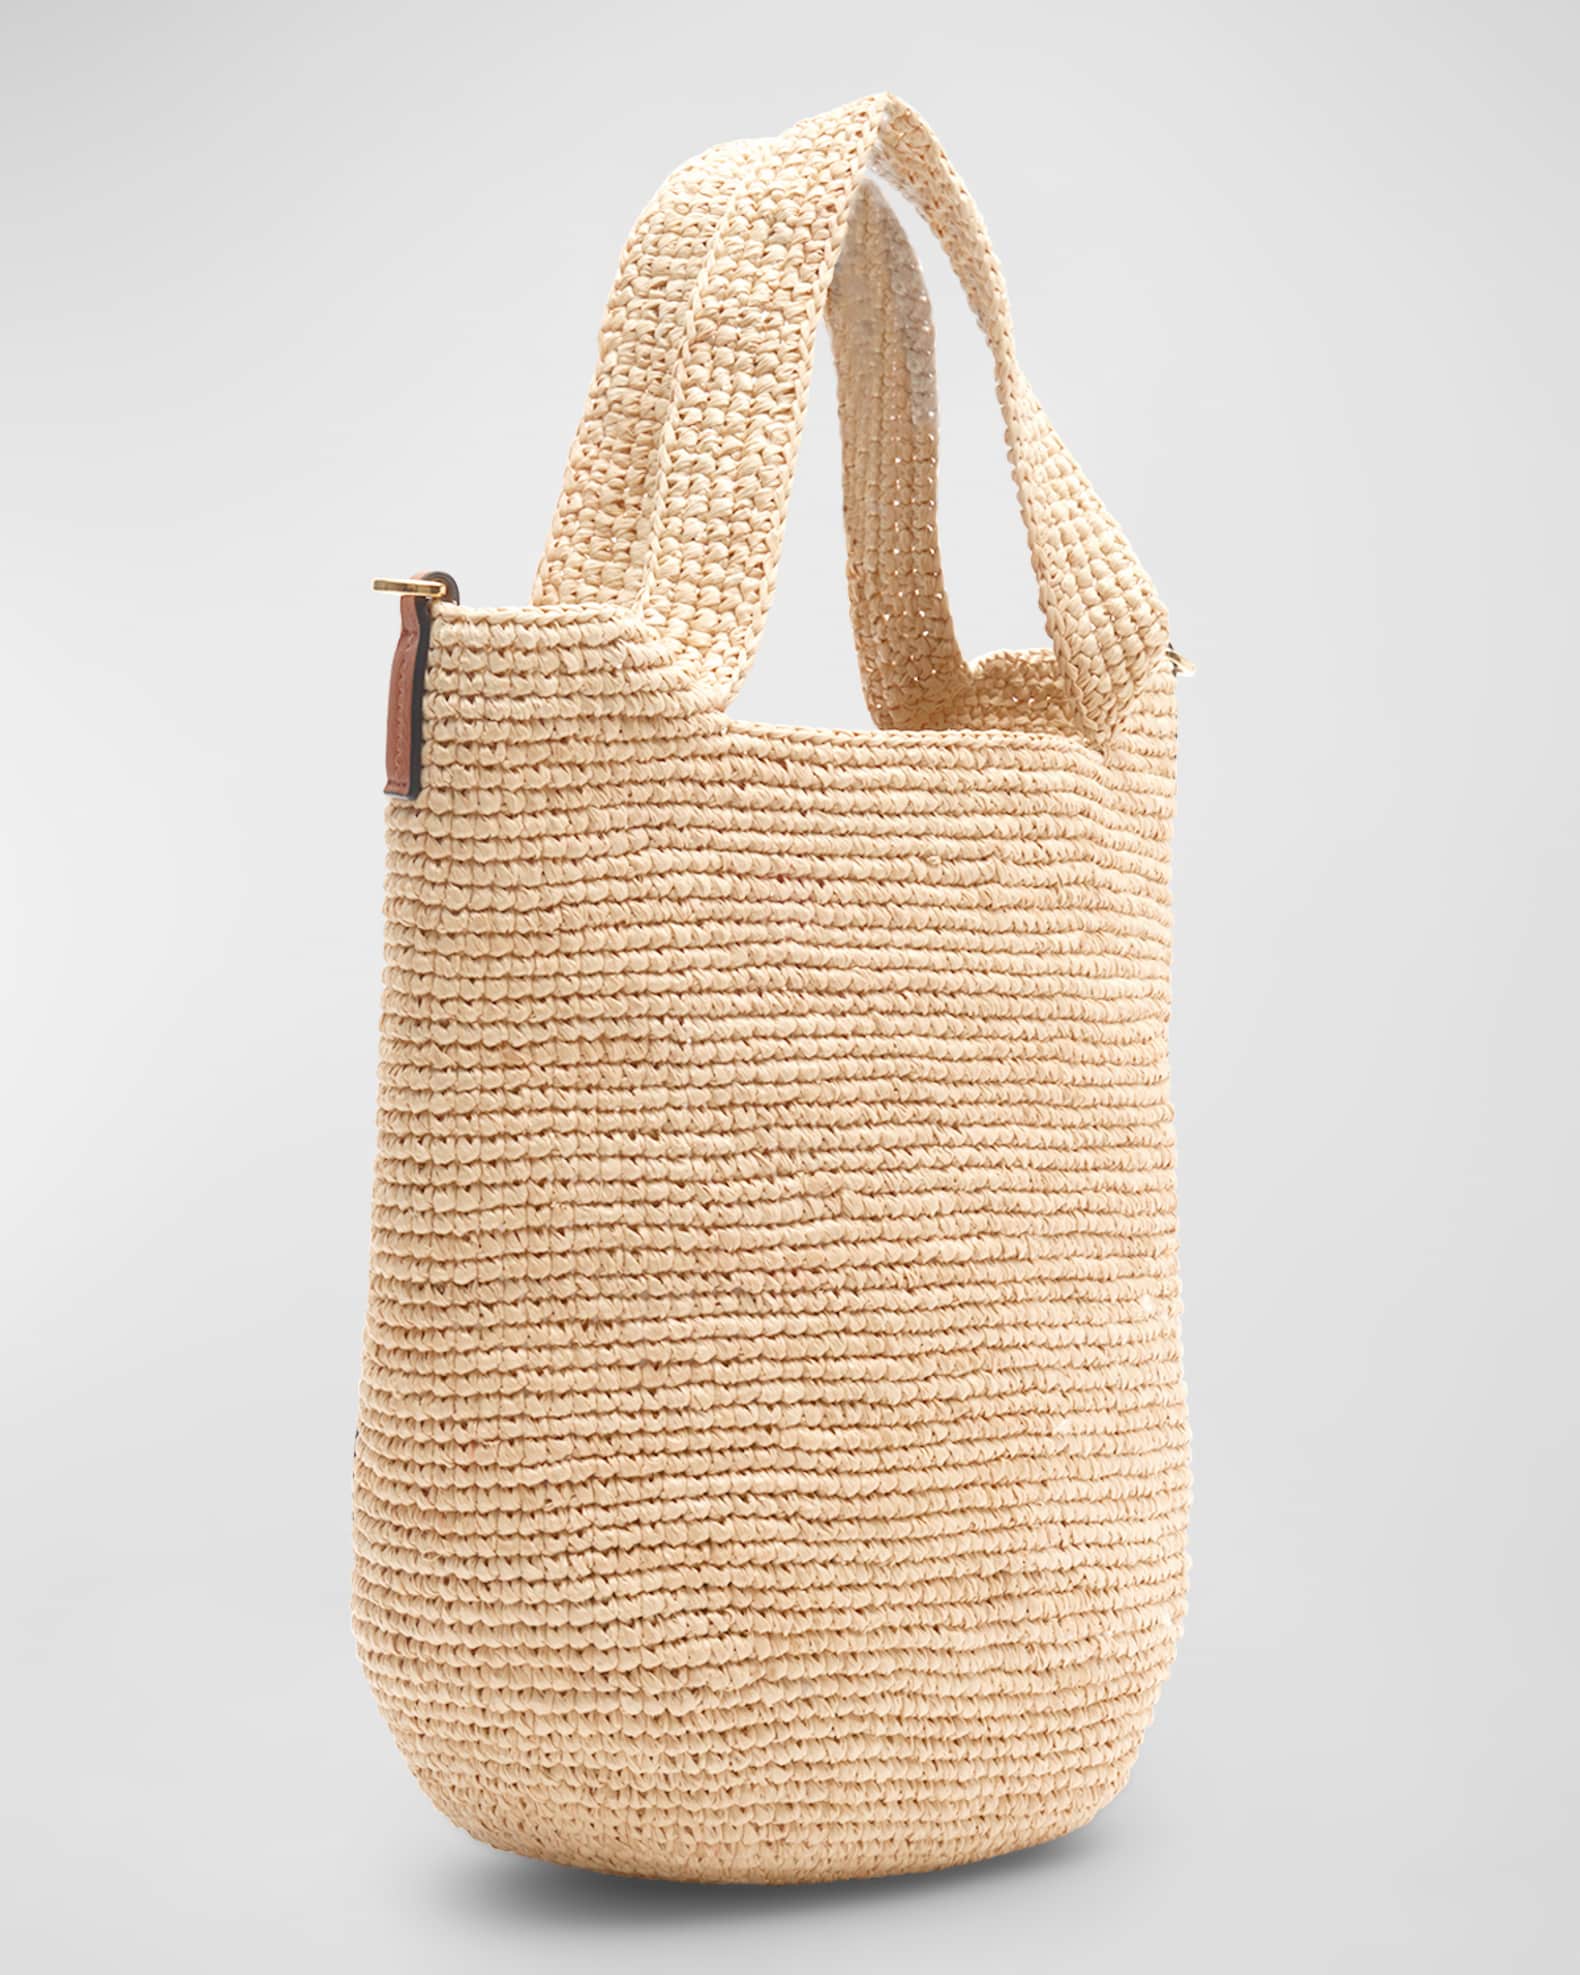 Loewe – Paula's Ibiza Sailor Small Bag Warm Desert